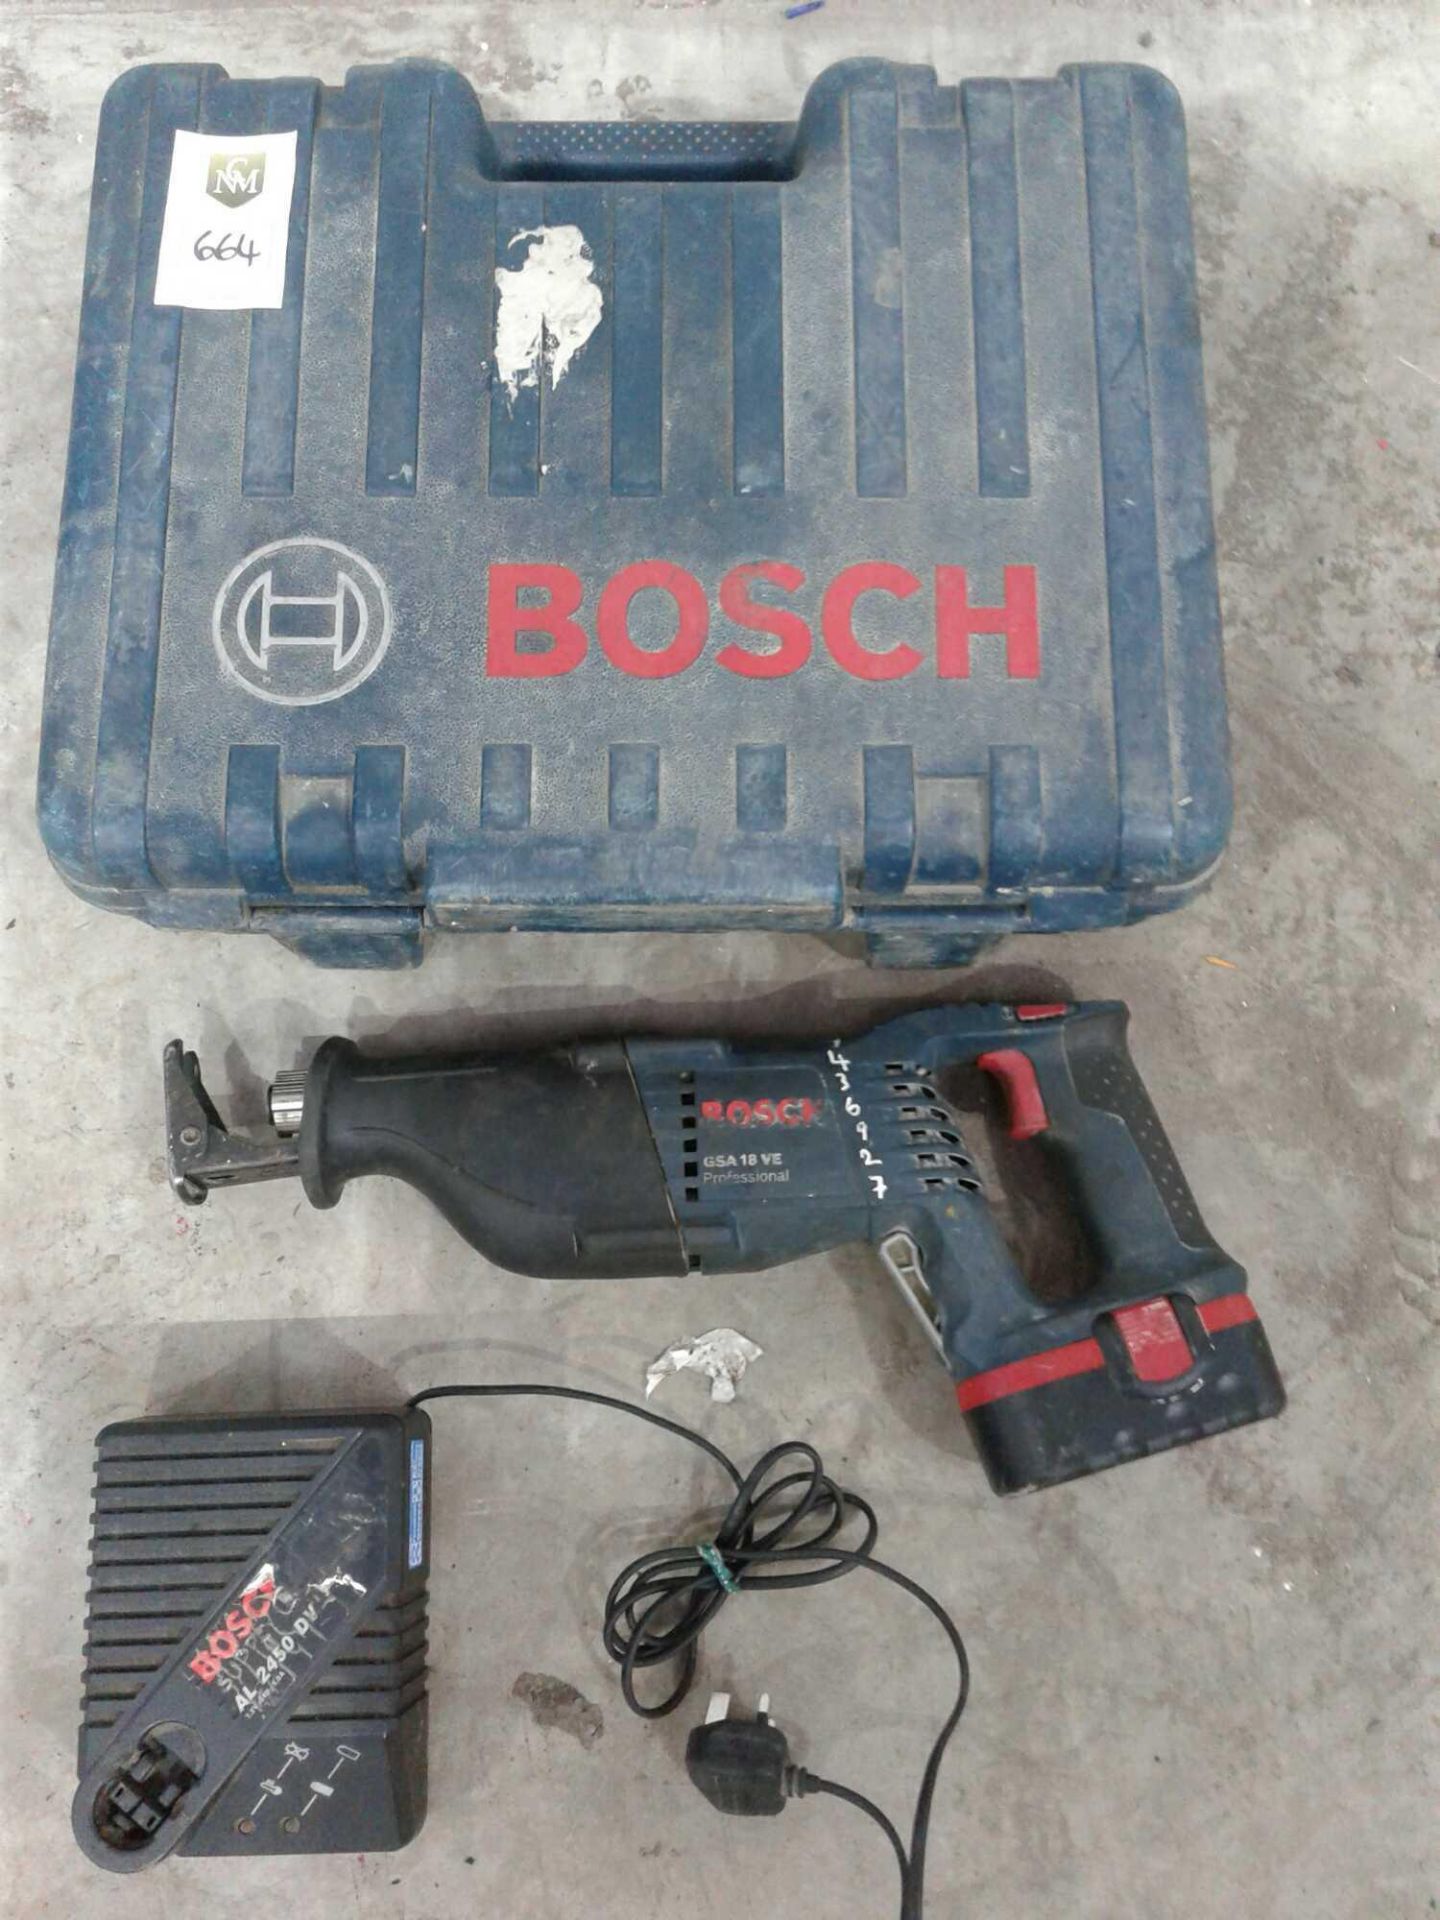 Bosch cordless reciprocating saw